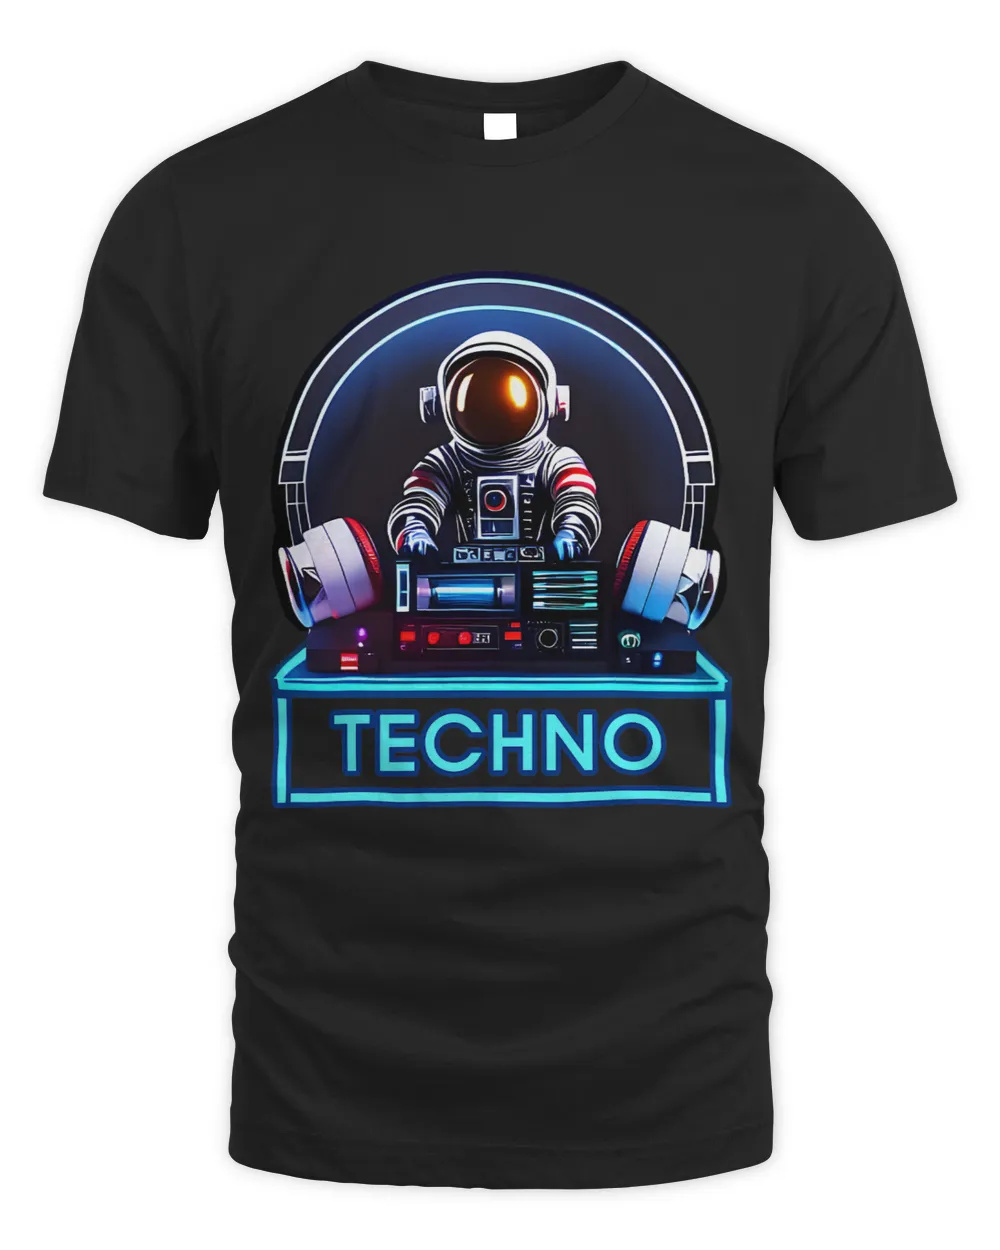 Techno Astronaut Rave Shirt Edm Dj Festival Tech House Music